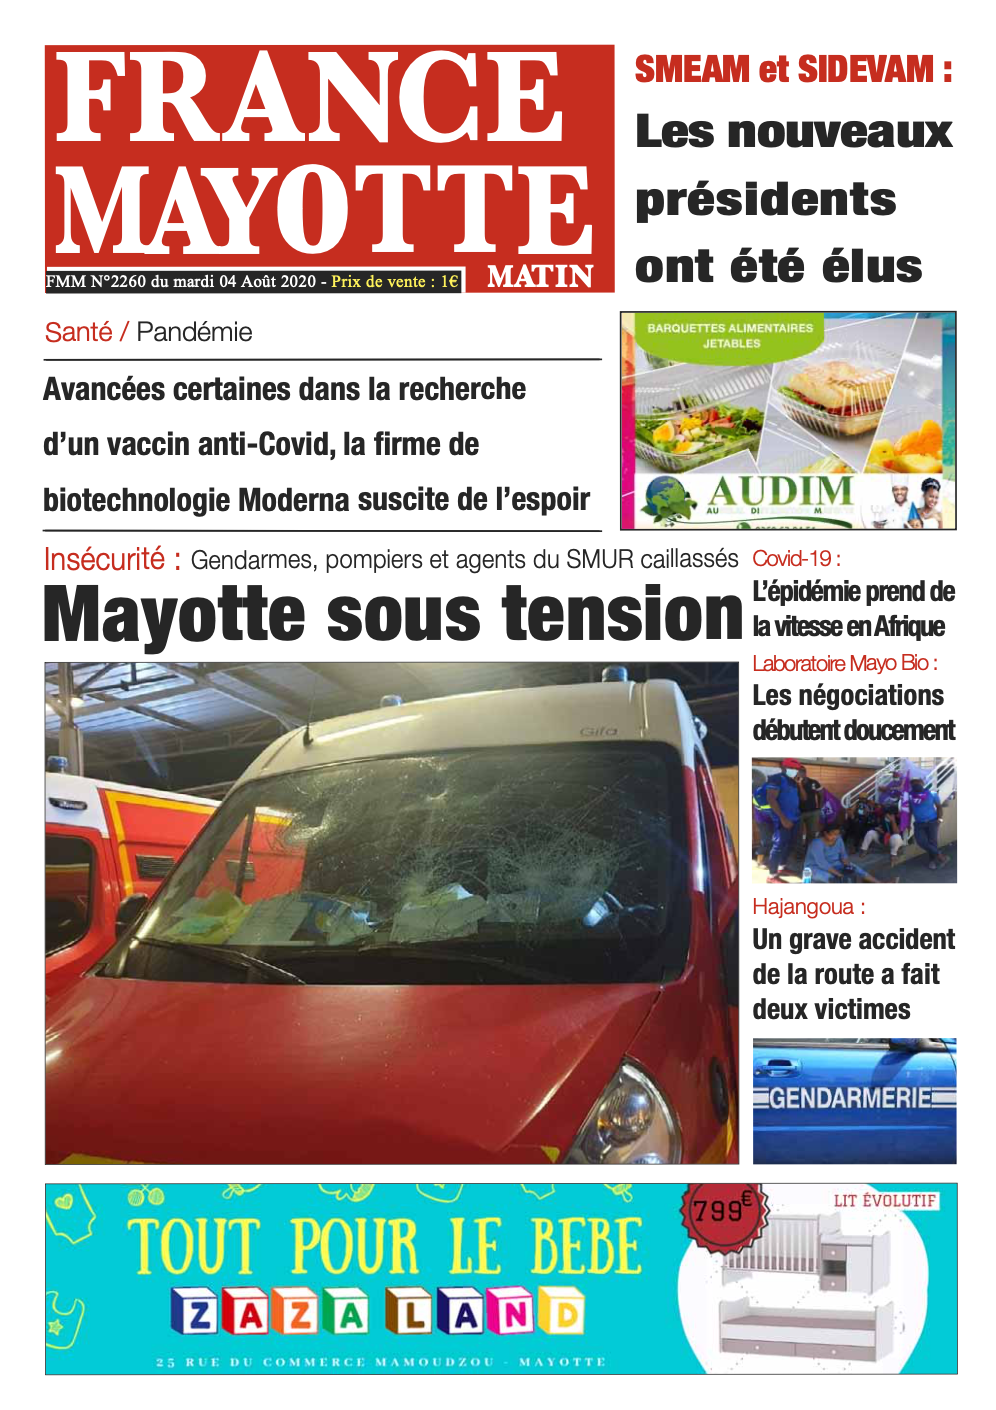 France Mayotte Mardi 4 août 2020